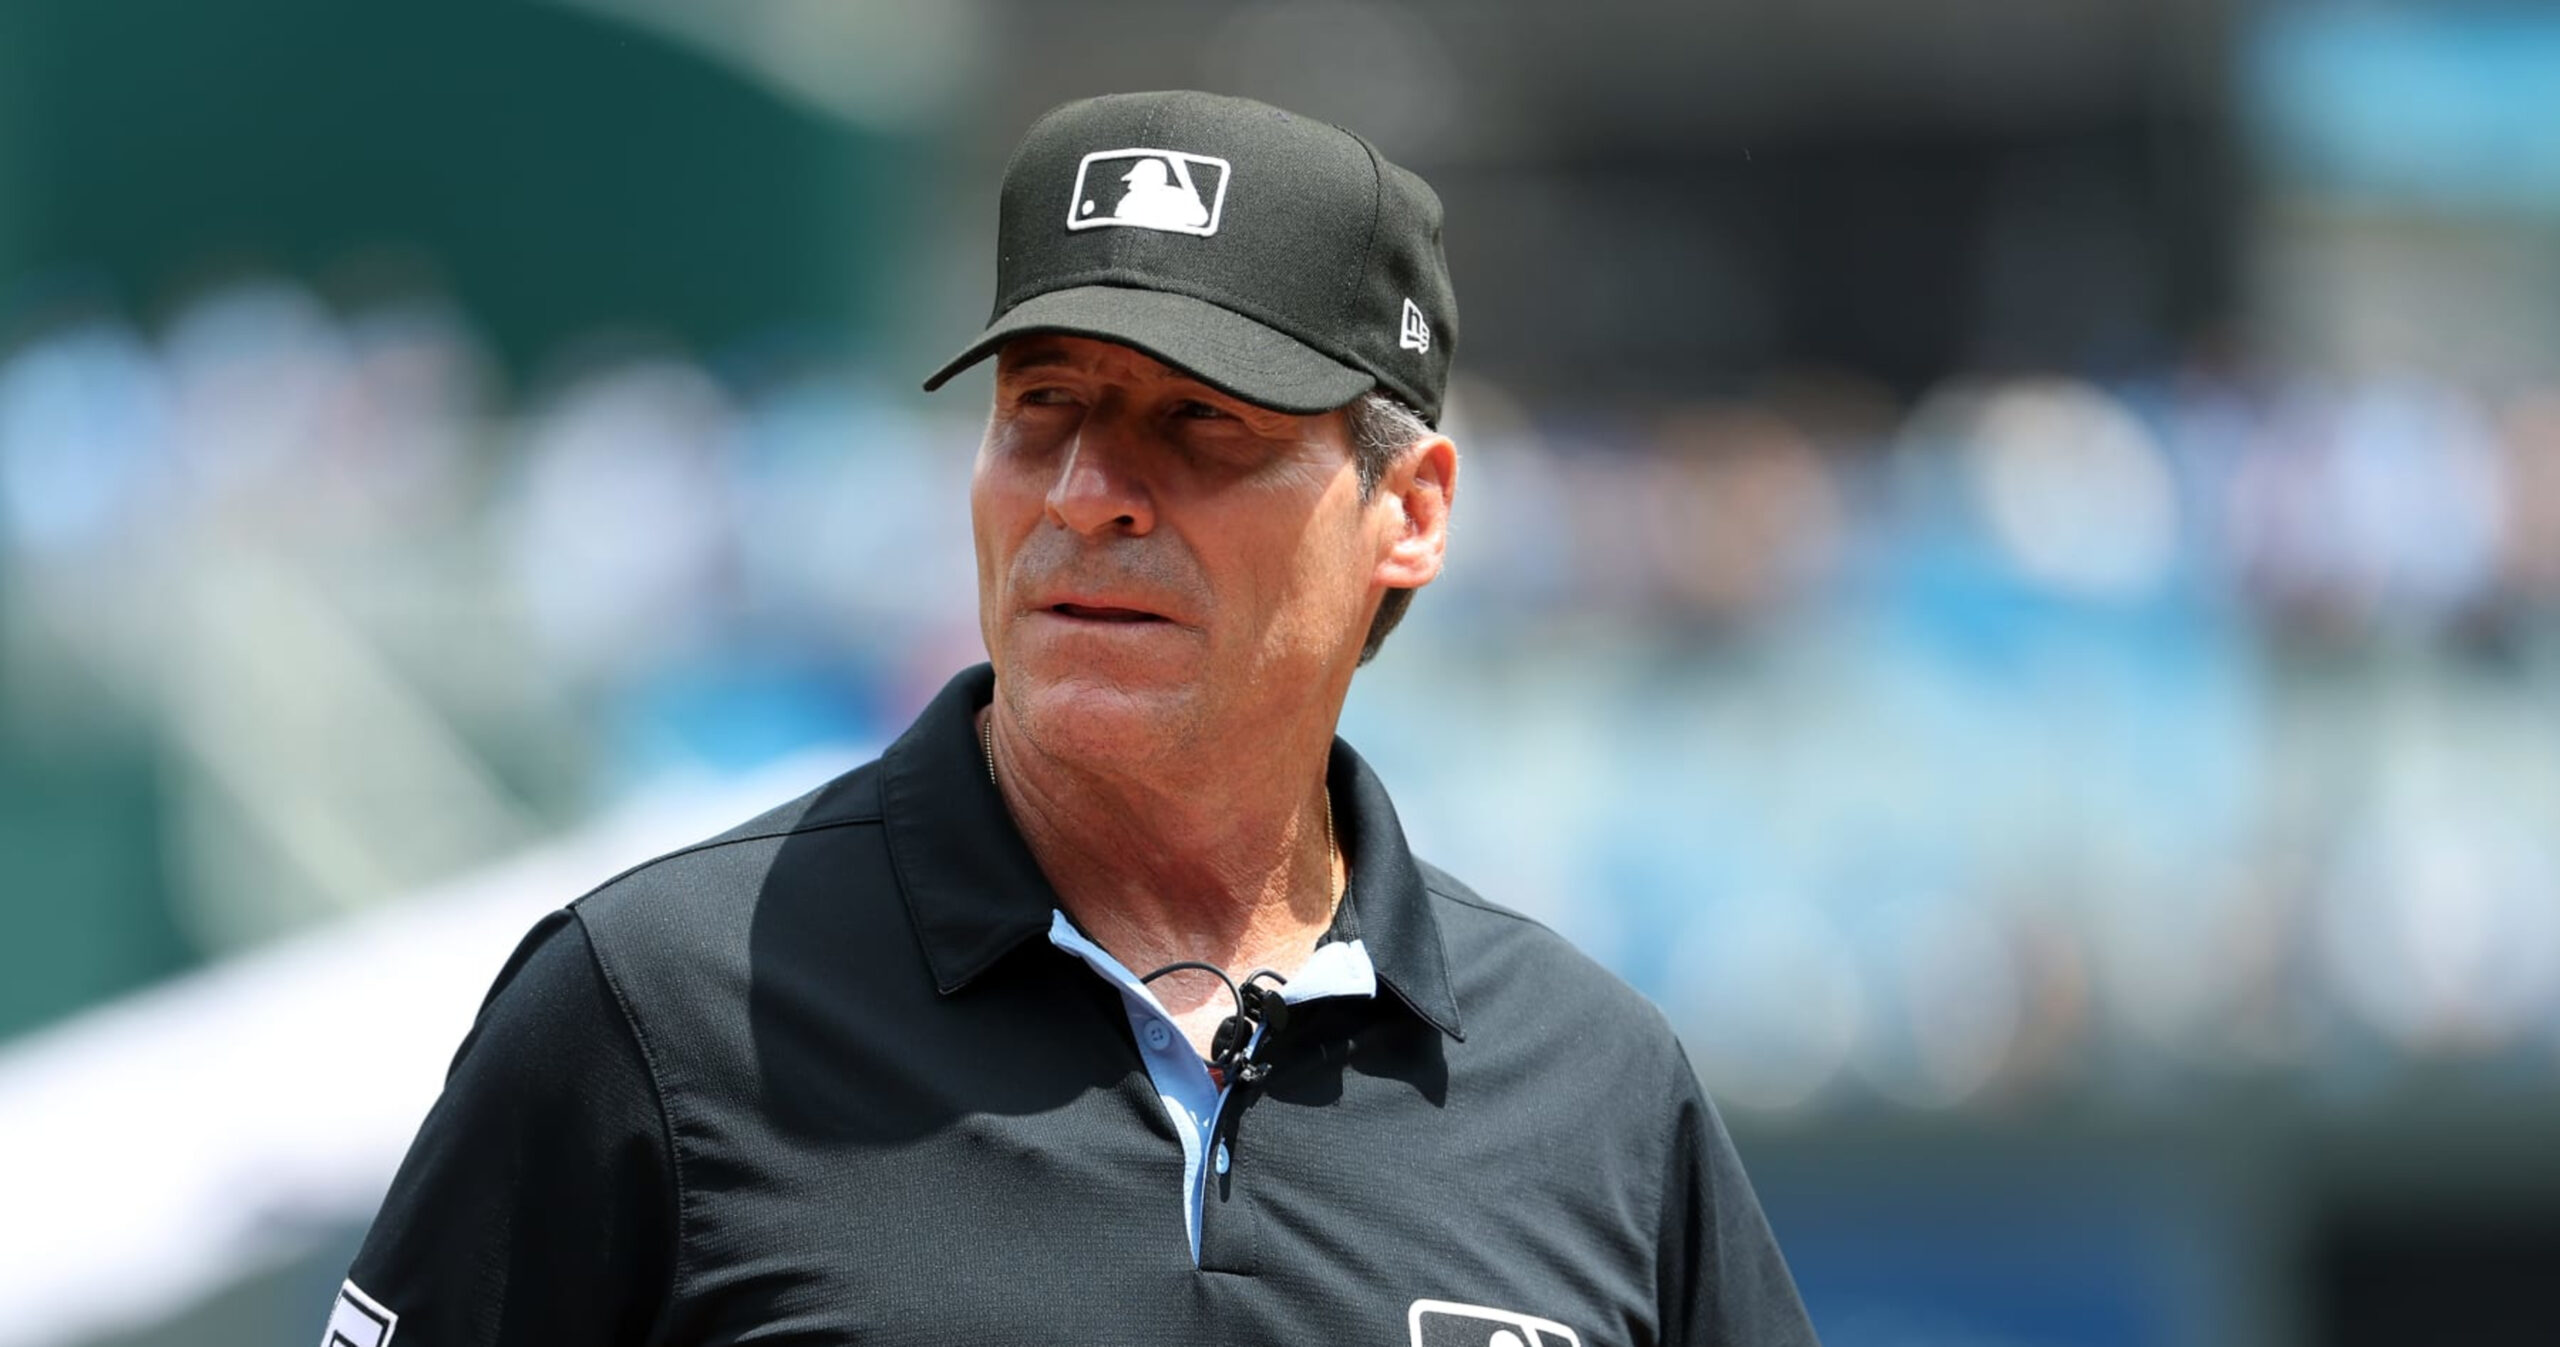 MLB Umpire Ángel Hernández Publicizes Retirement After 34 Seasons in Majors